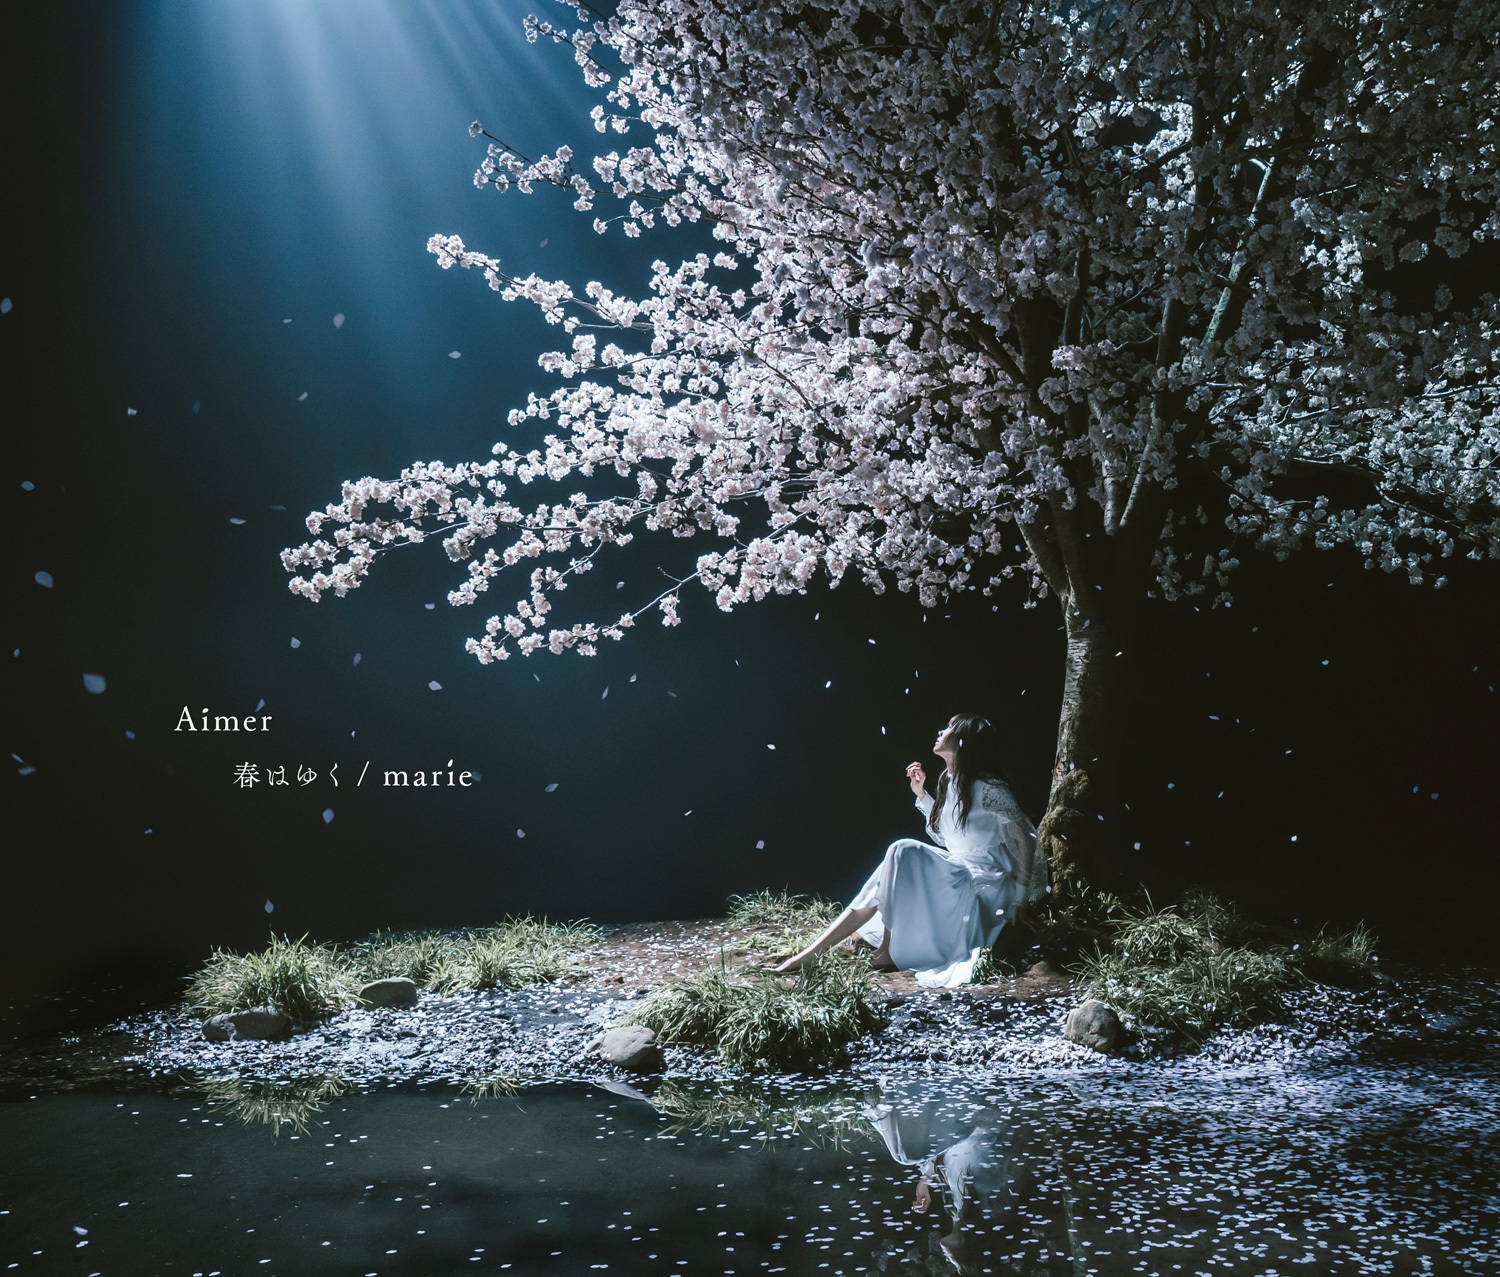 Aimer 「春はゆく / marie」初回生産限定盤